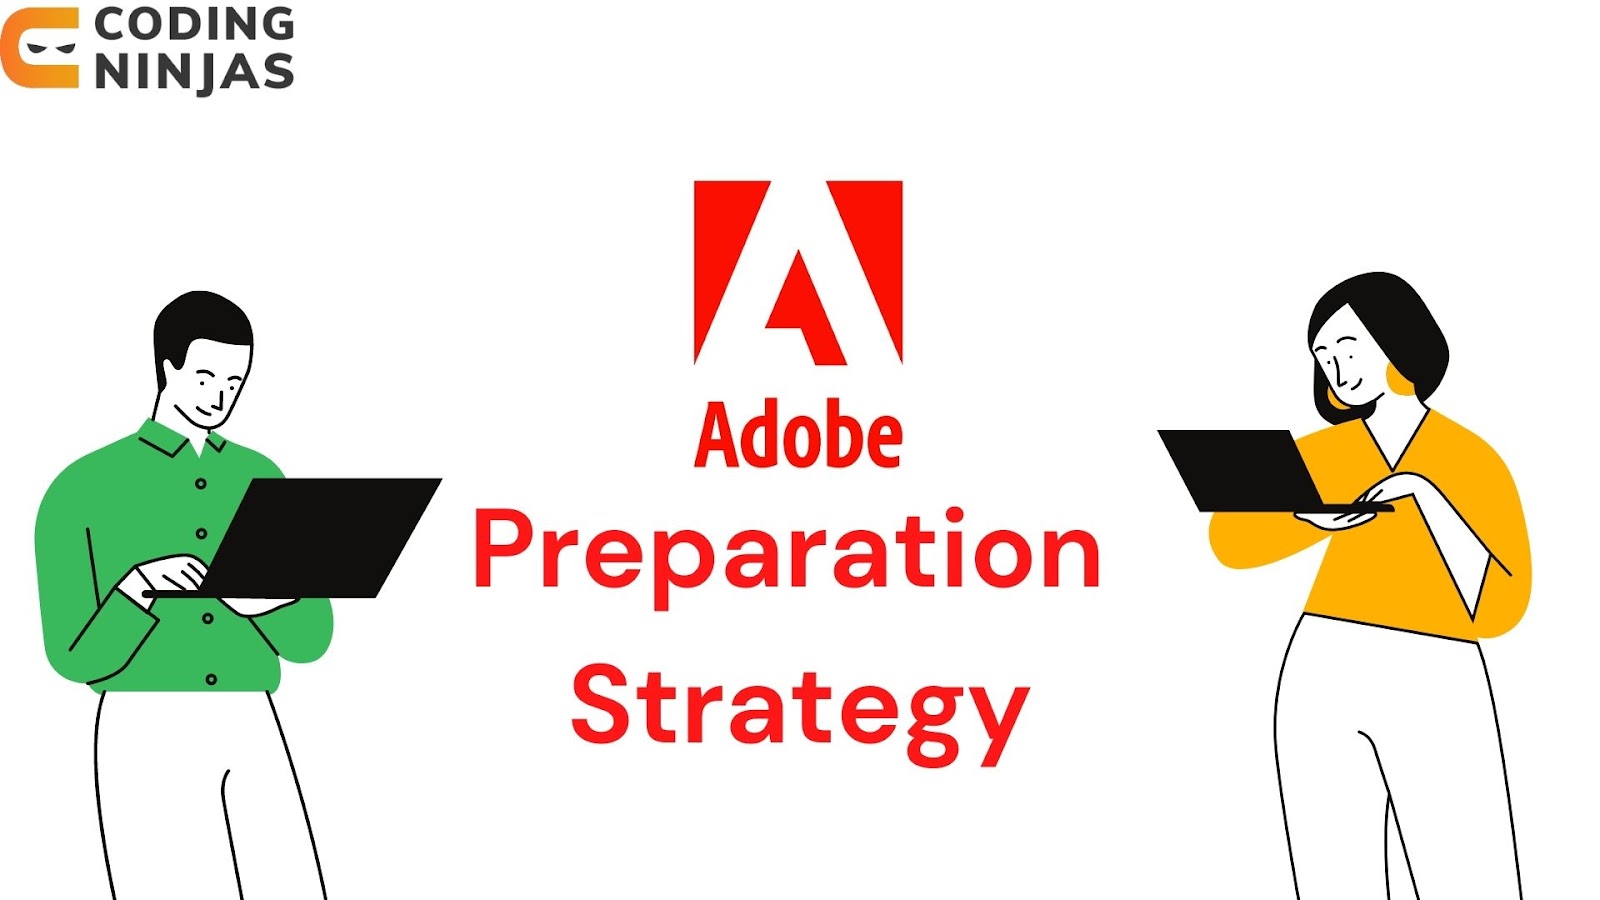 Adobe Analytics Challenge Coding Ninjas CodeStudio